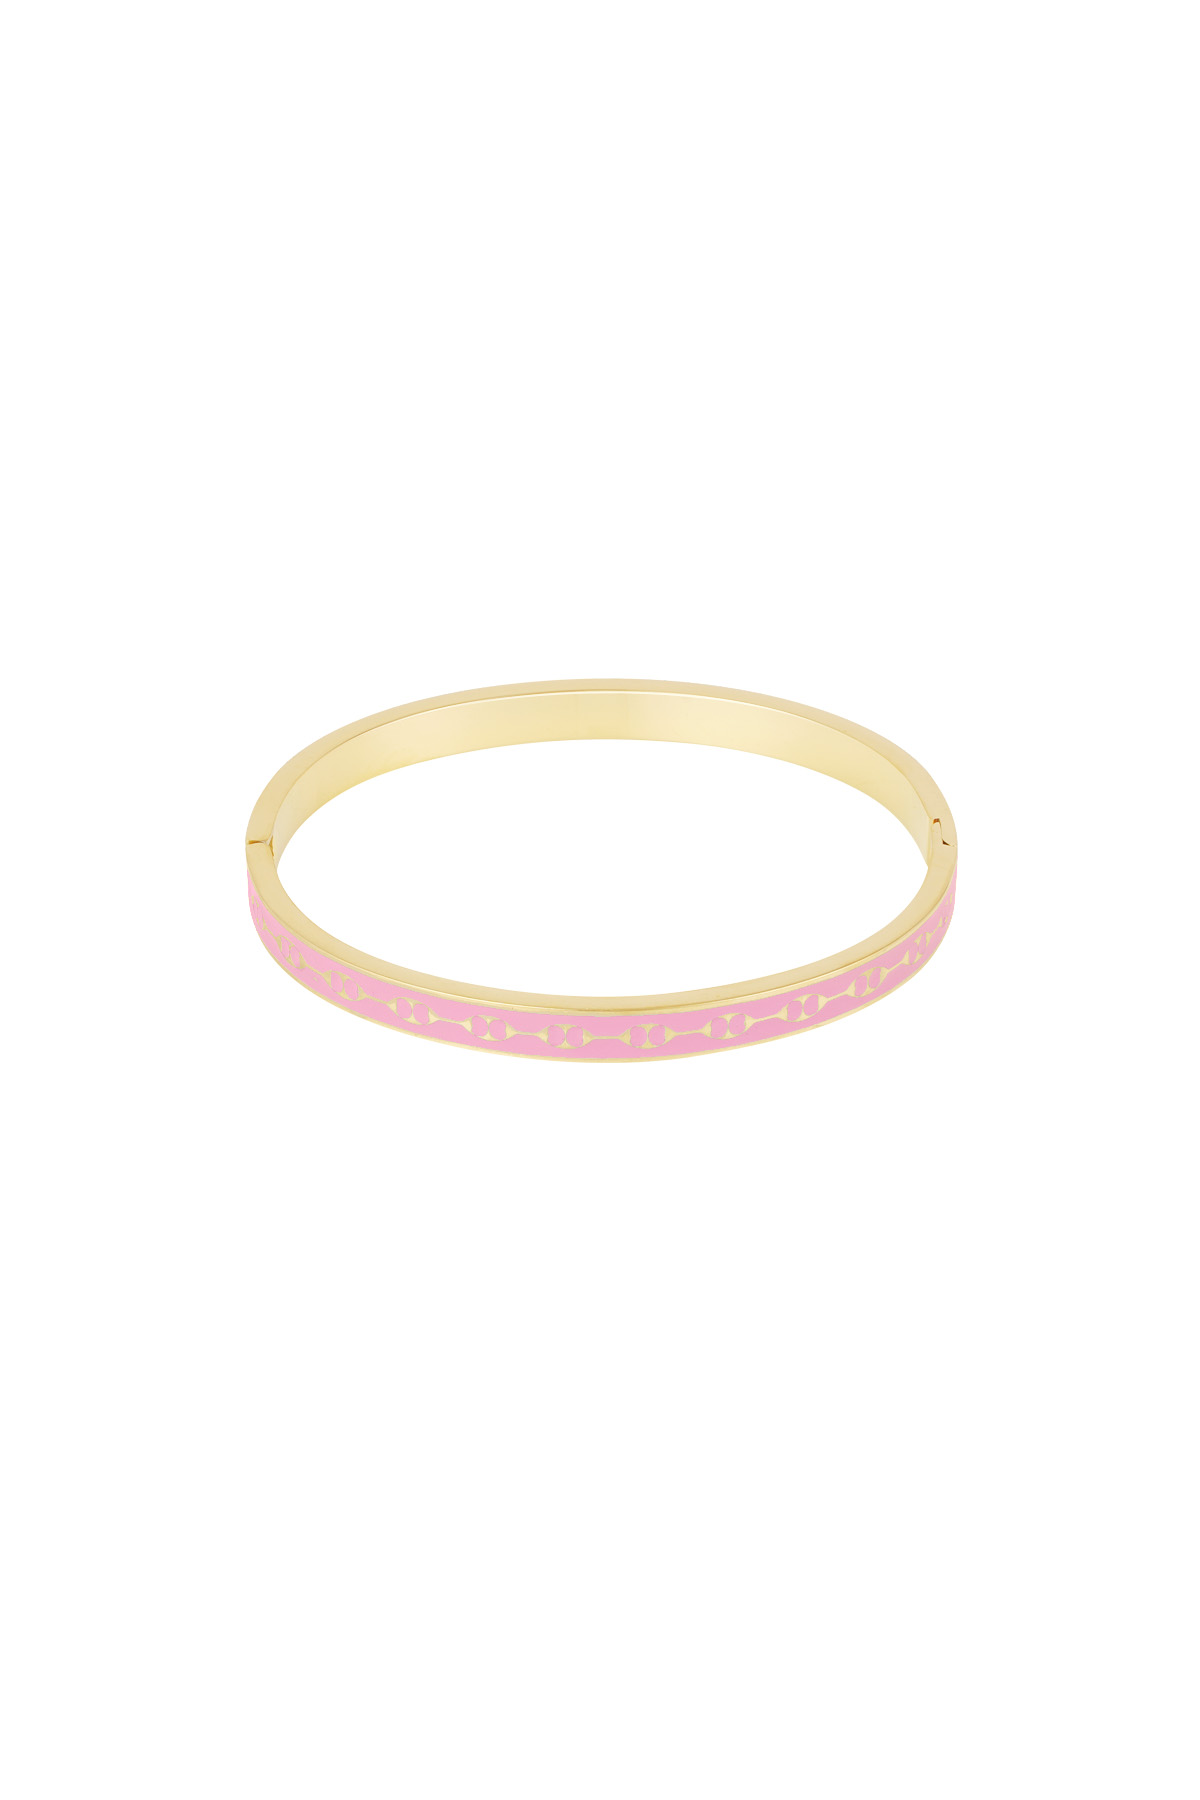 Slave bracelet with colorful print - pink/gold  